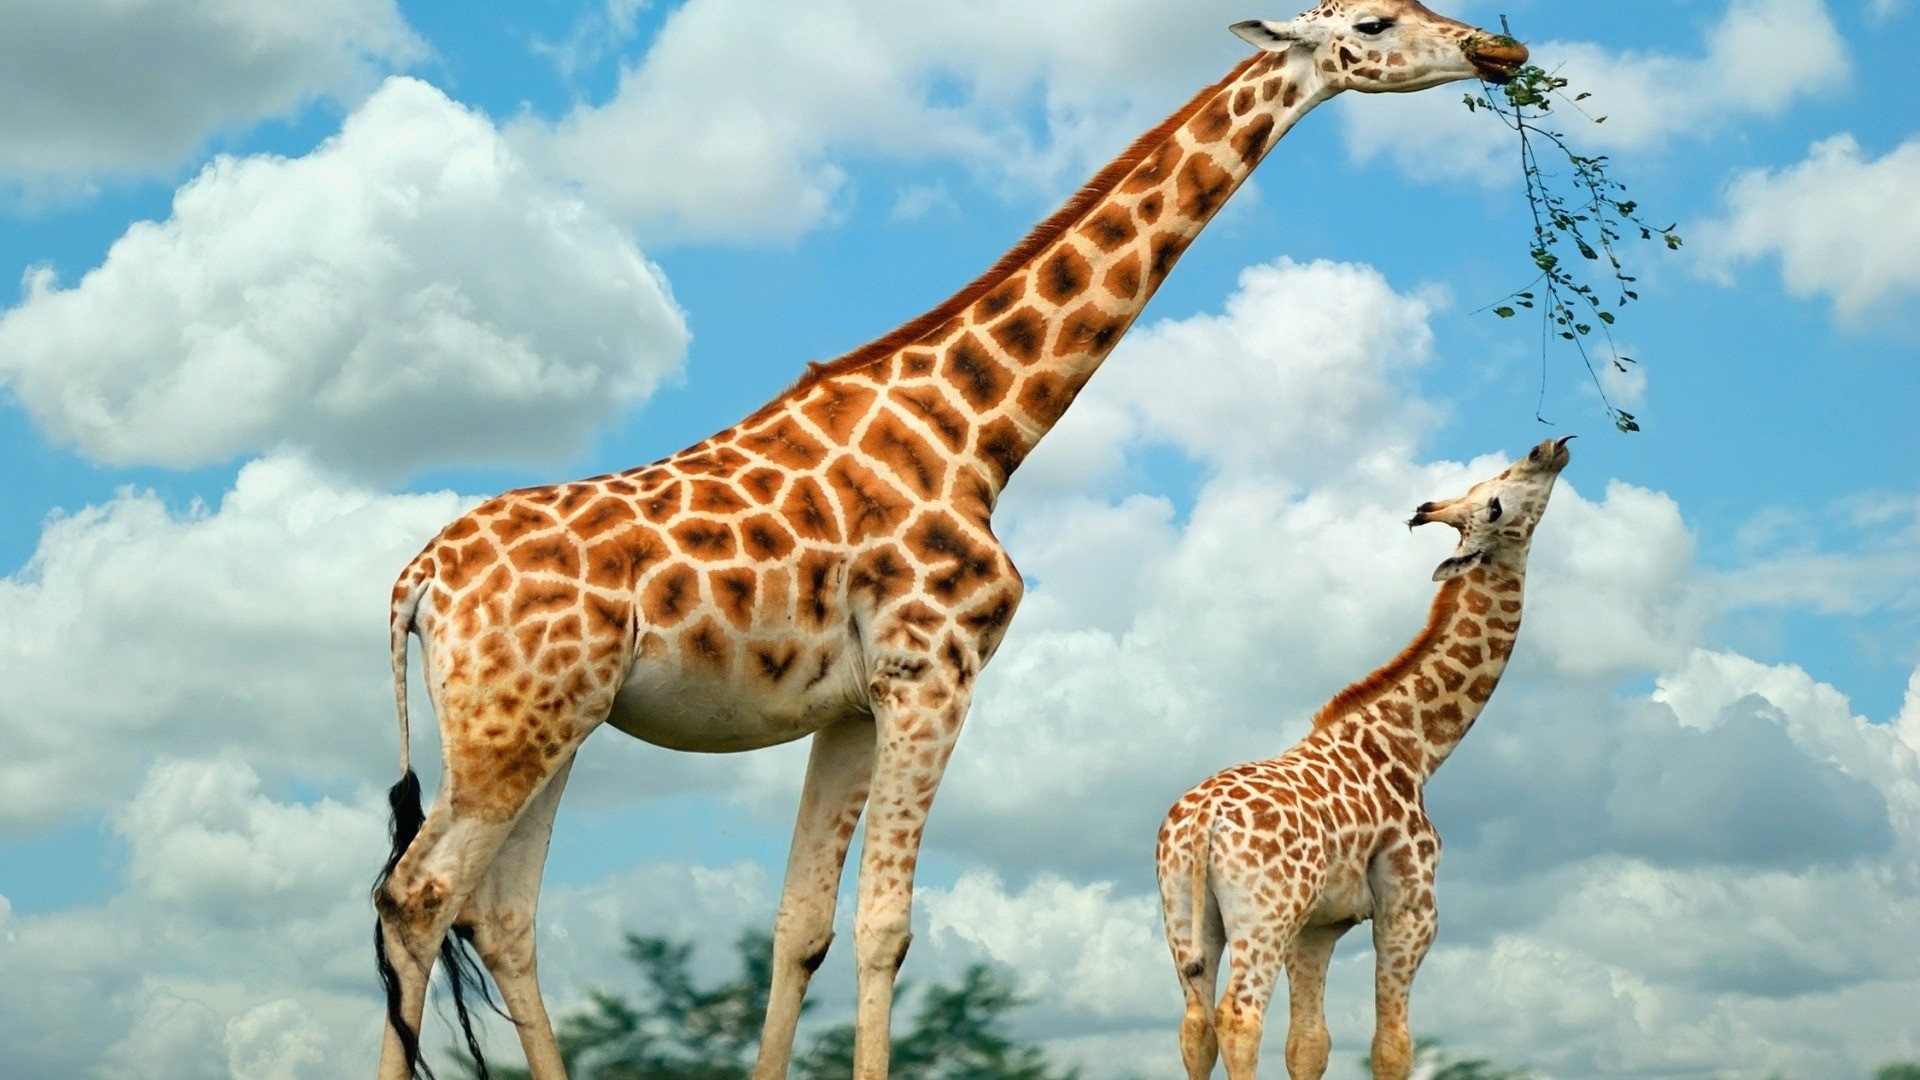 Giraffe And Her Baby - HD Wallpaper 